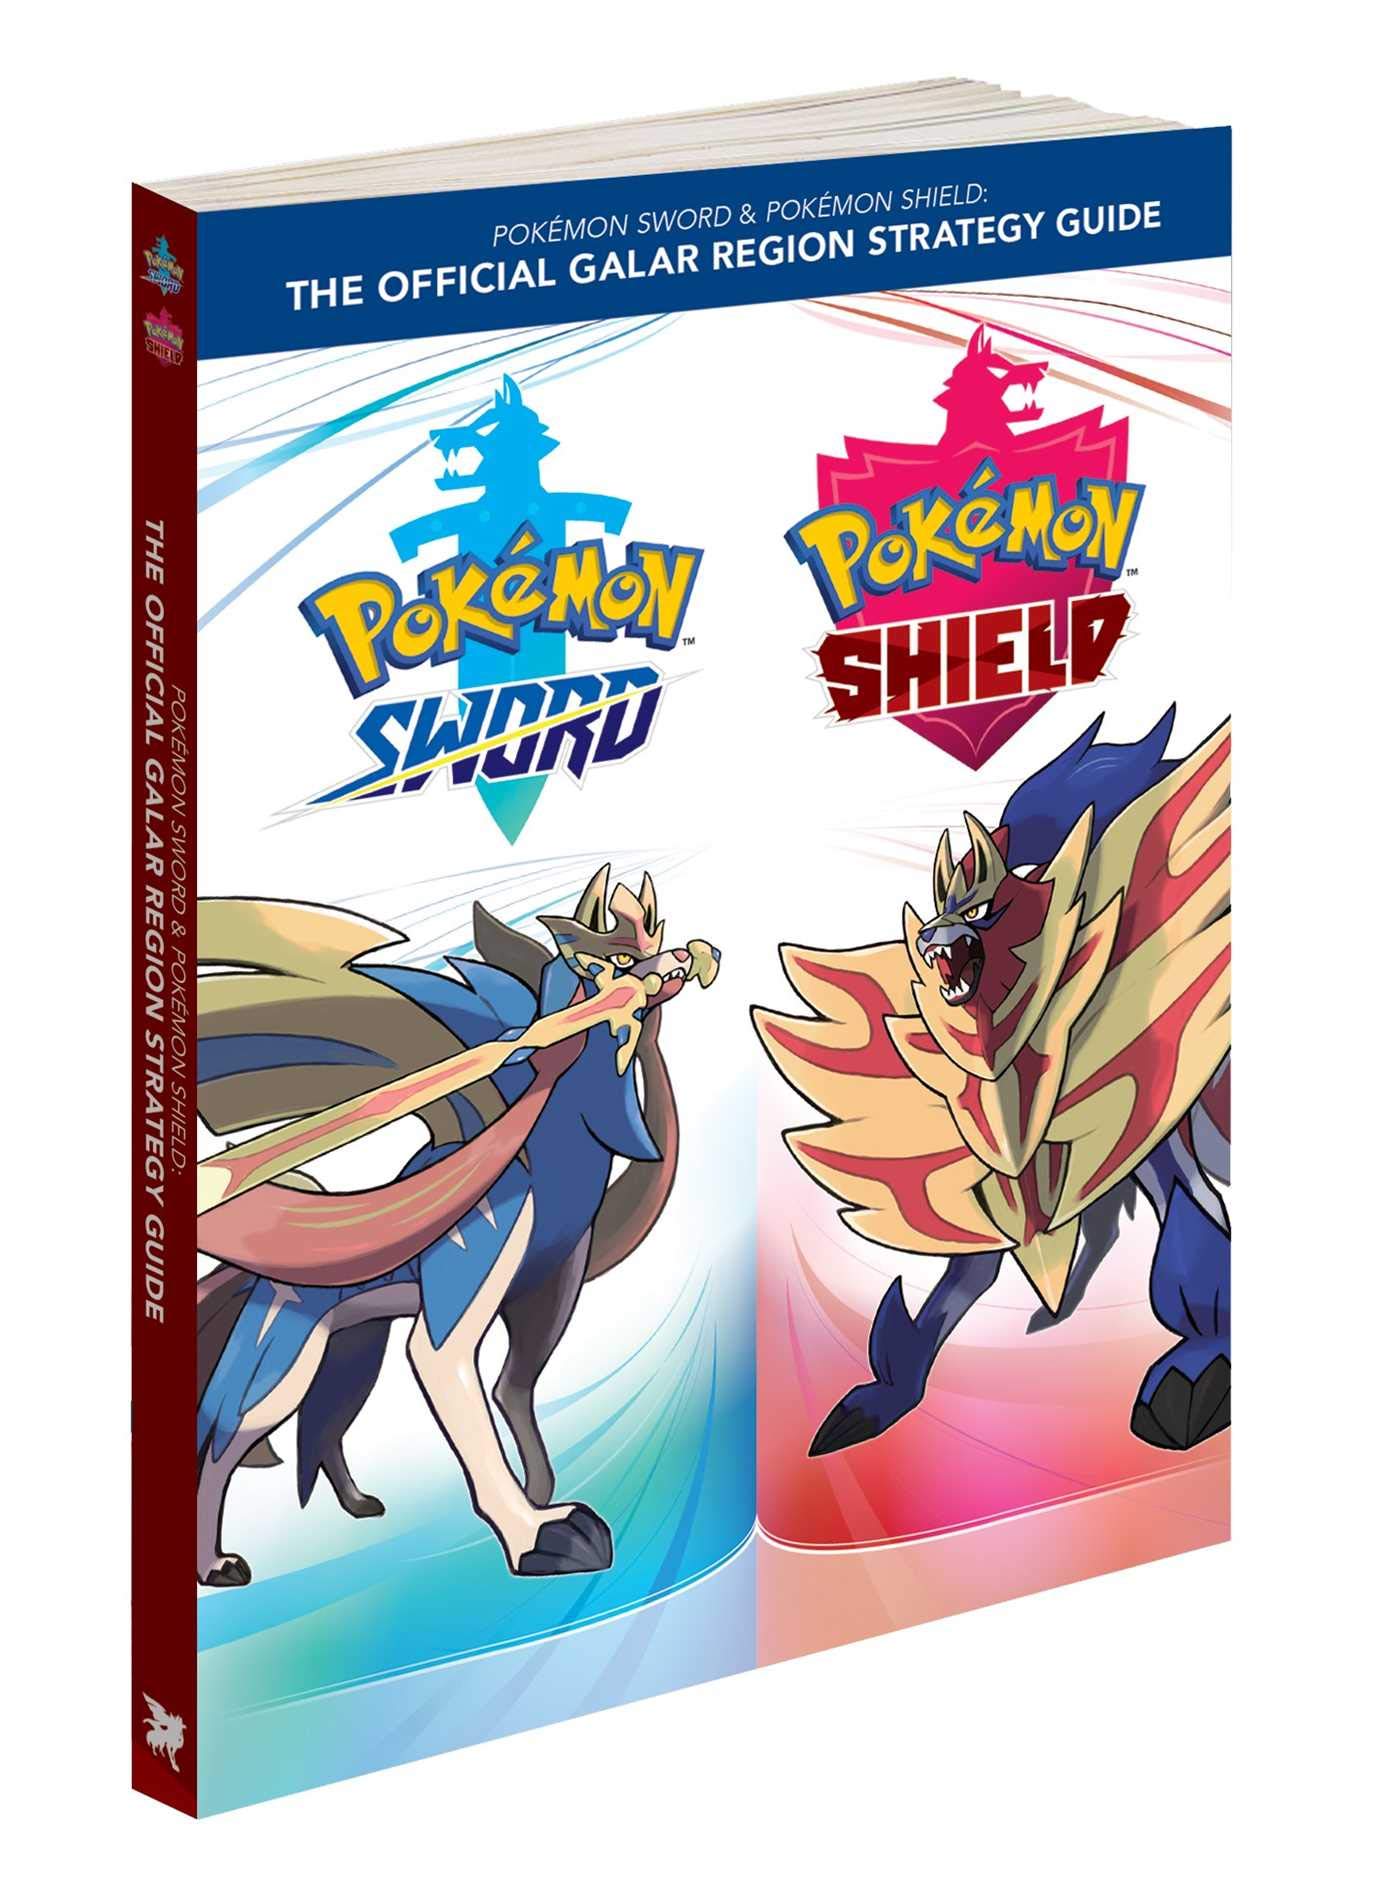 Pokemon Sword & Shield "Official Galar Region Strategy Guide" detailed | GoNintendo